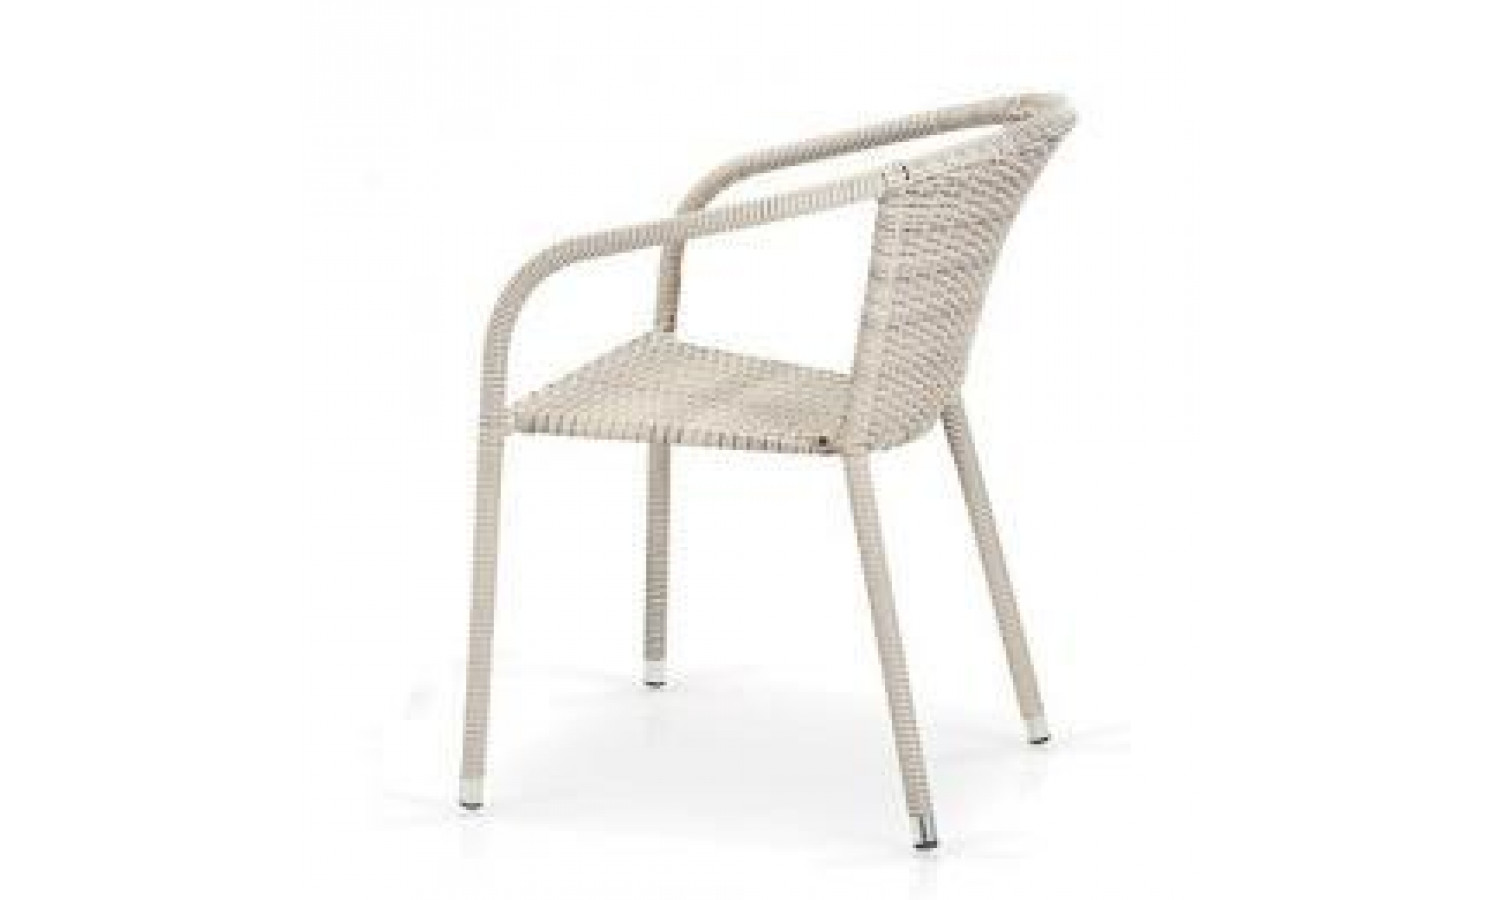 Плетеное кресло Y137C-W85 Latte